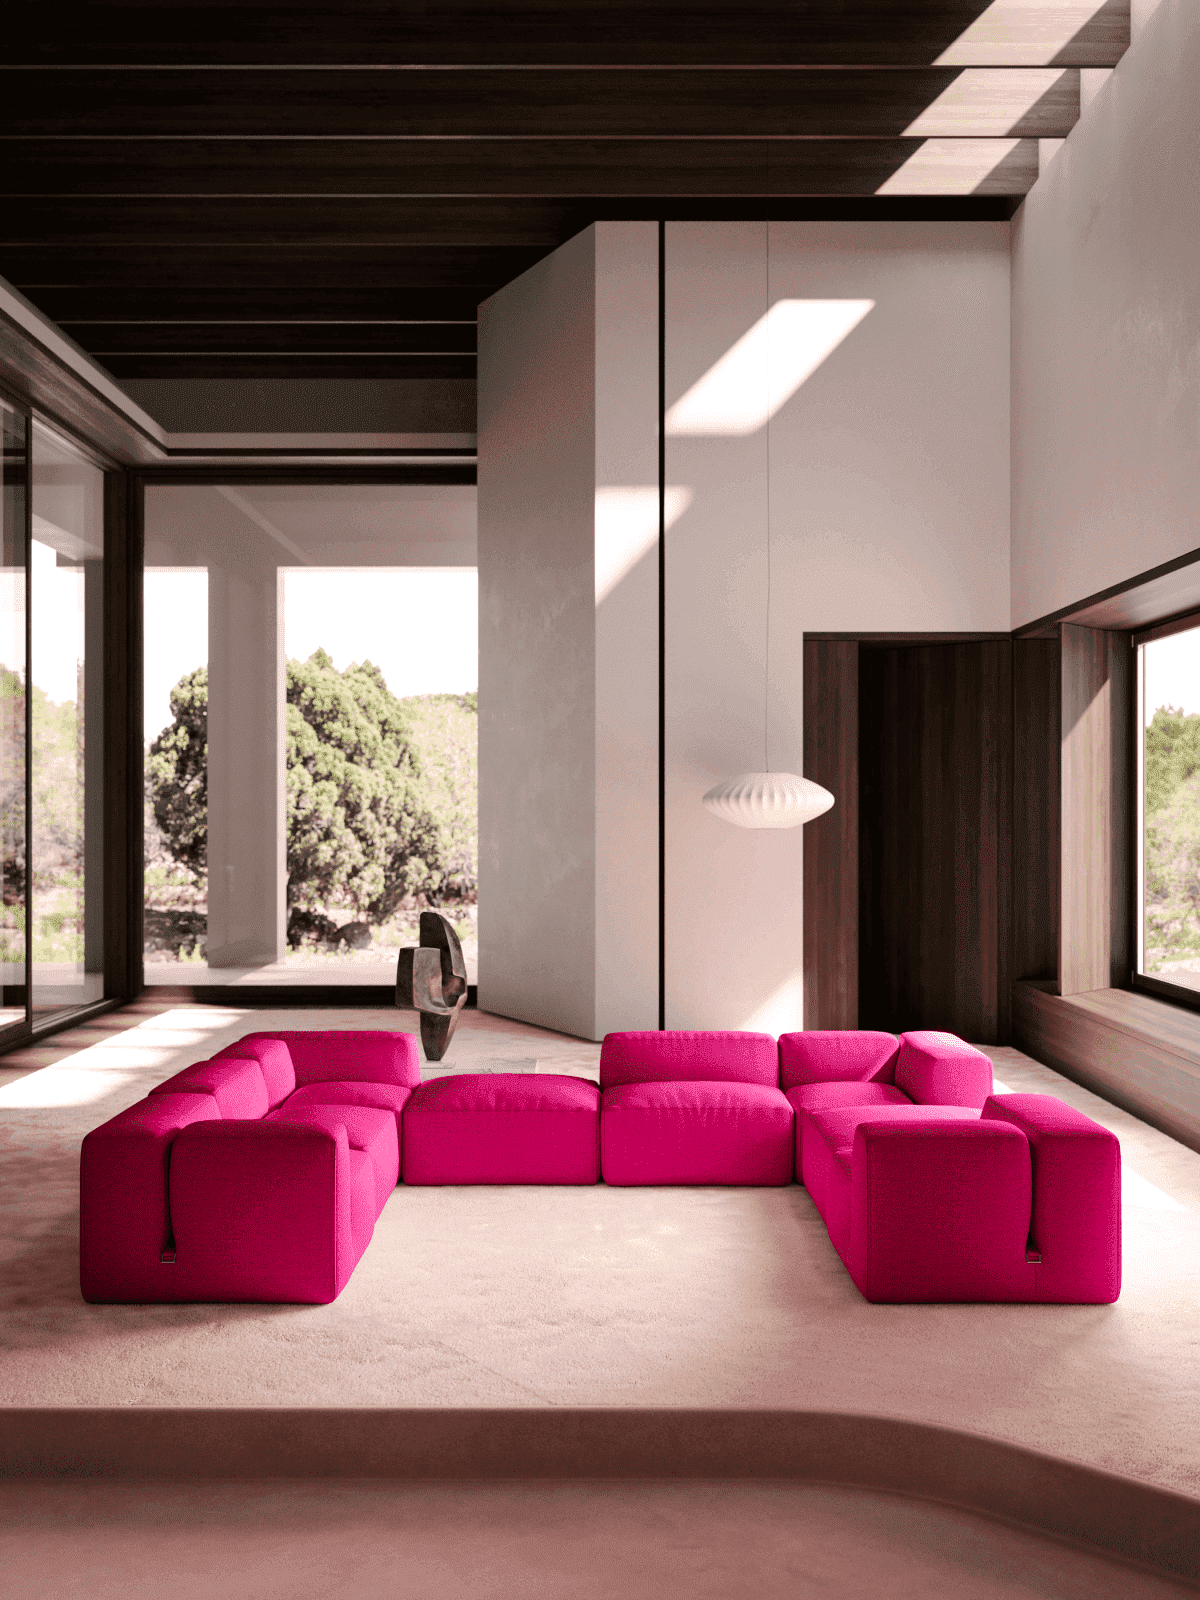 design sofa by tacchini, mario bellini, pink sofa in modern living room